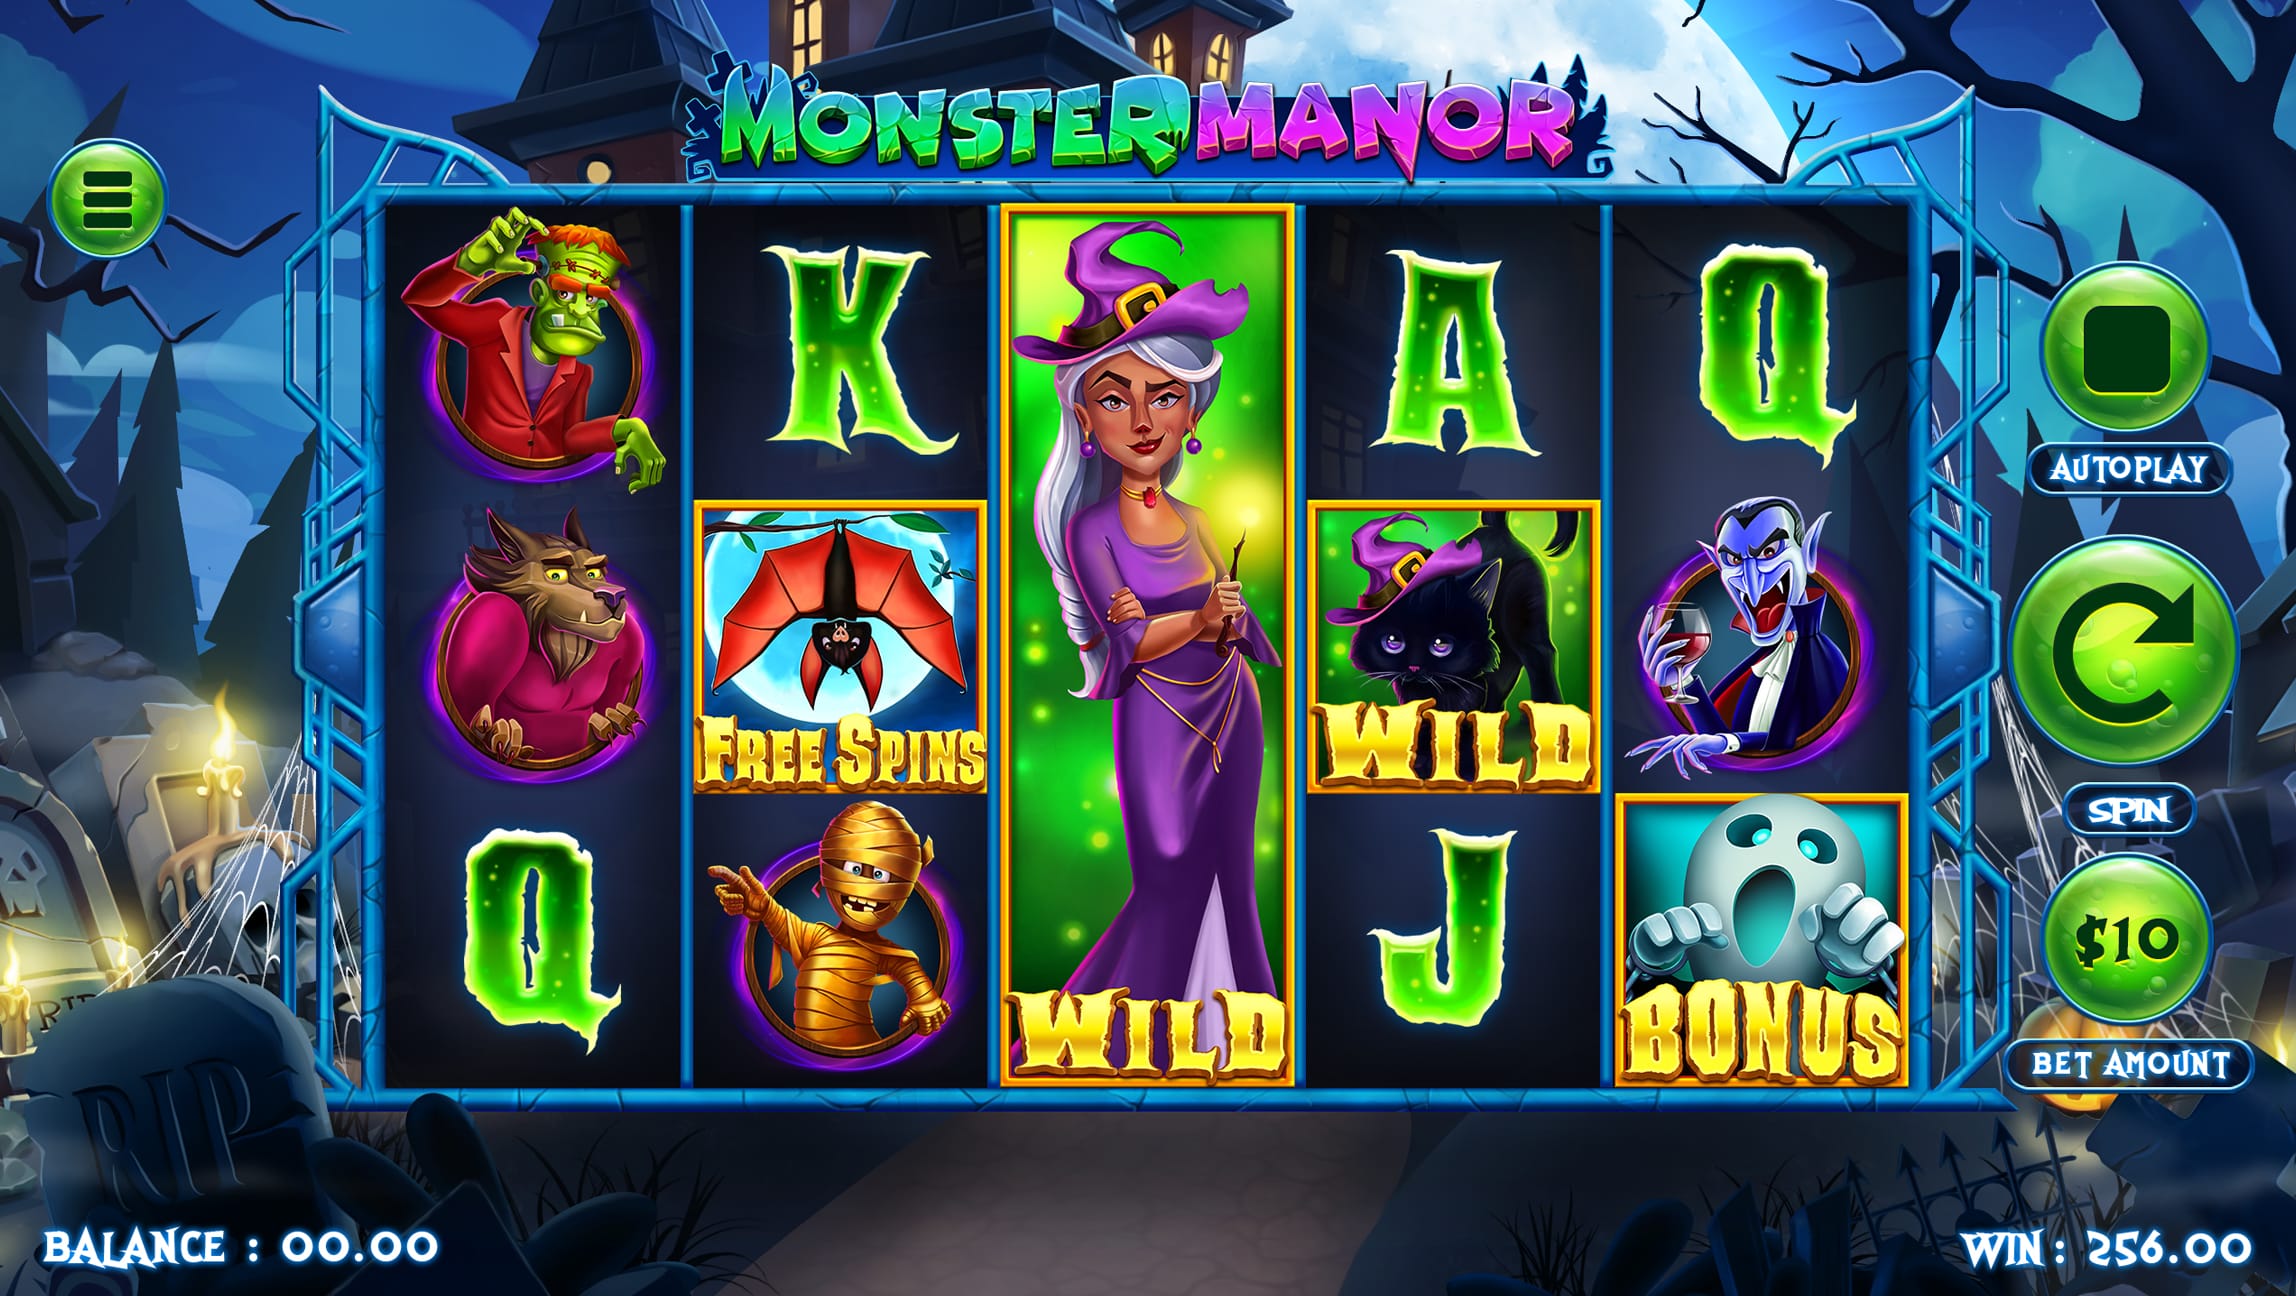 Monsters Manor